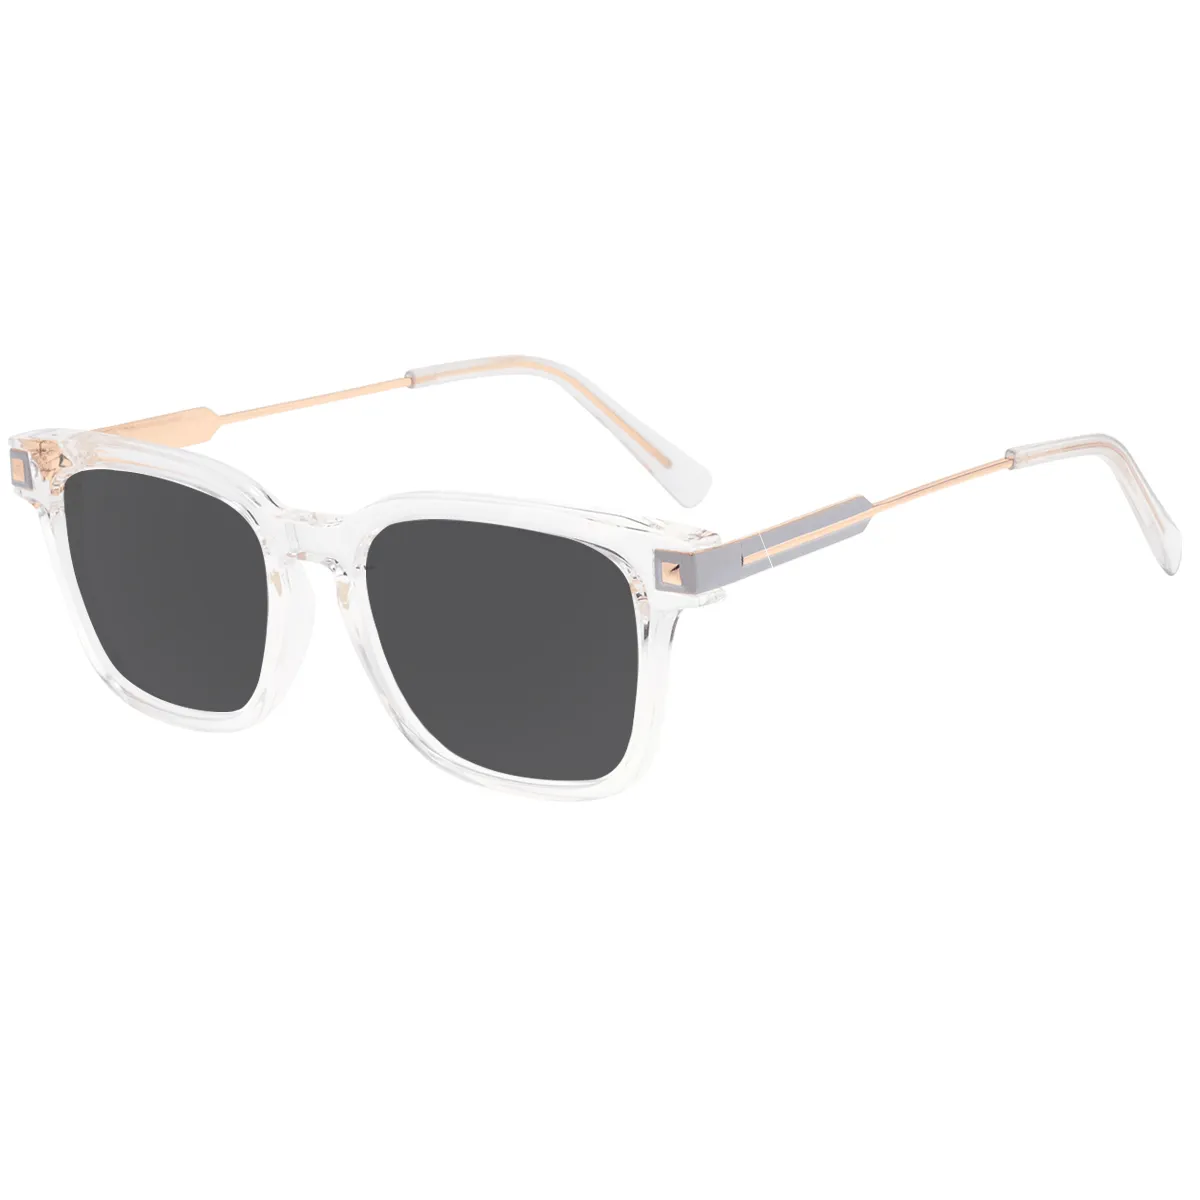 Jarred - Square Transparent Sunglasses for Women